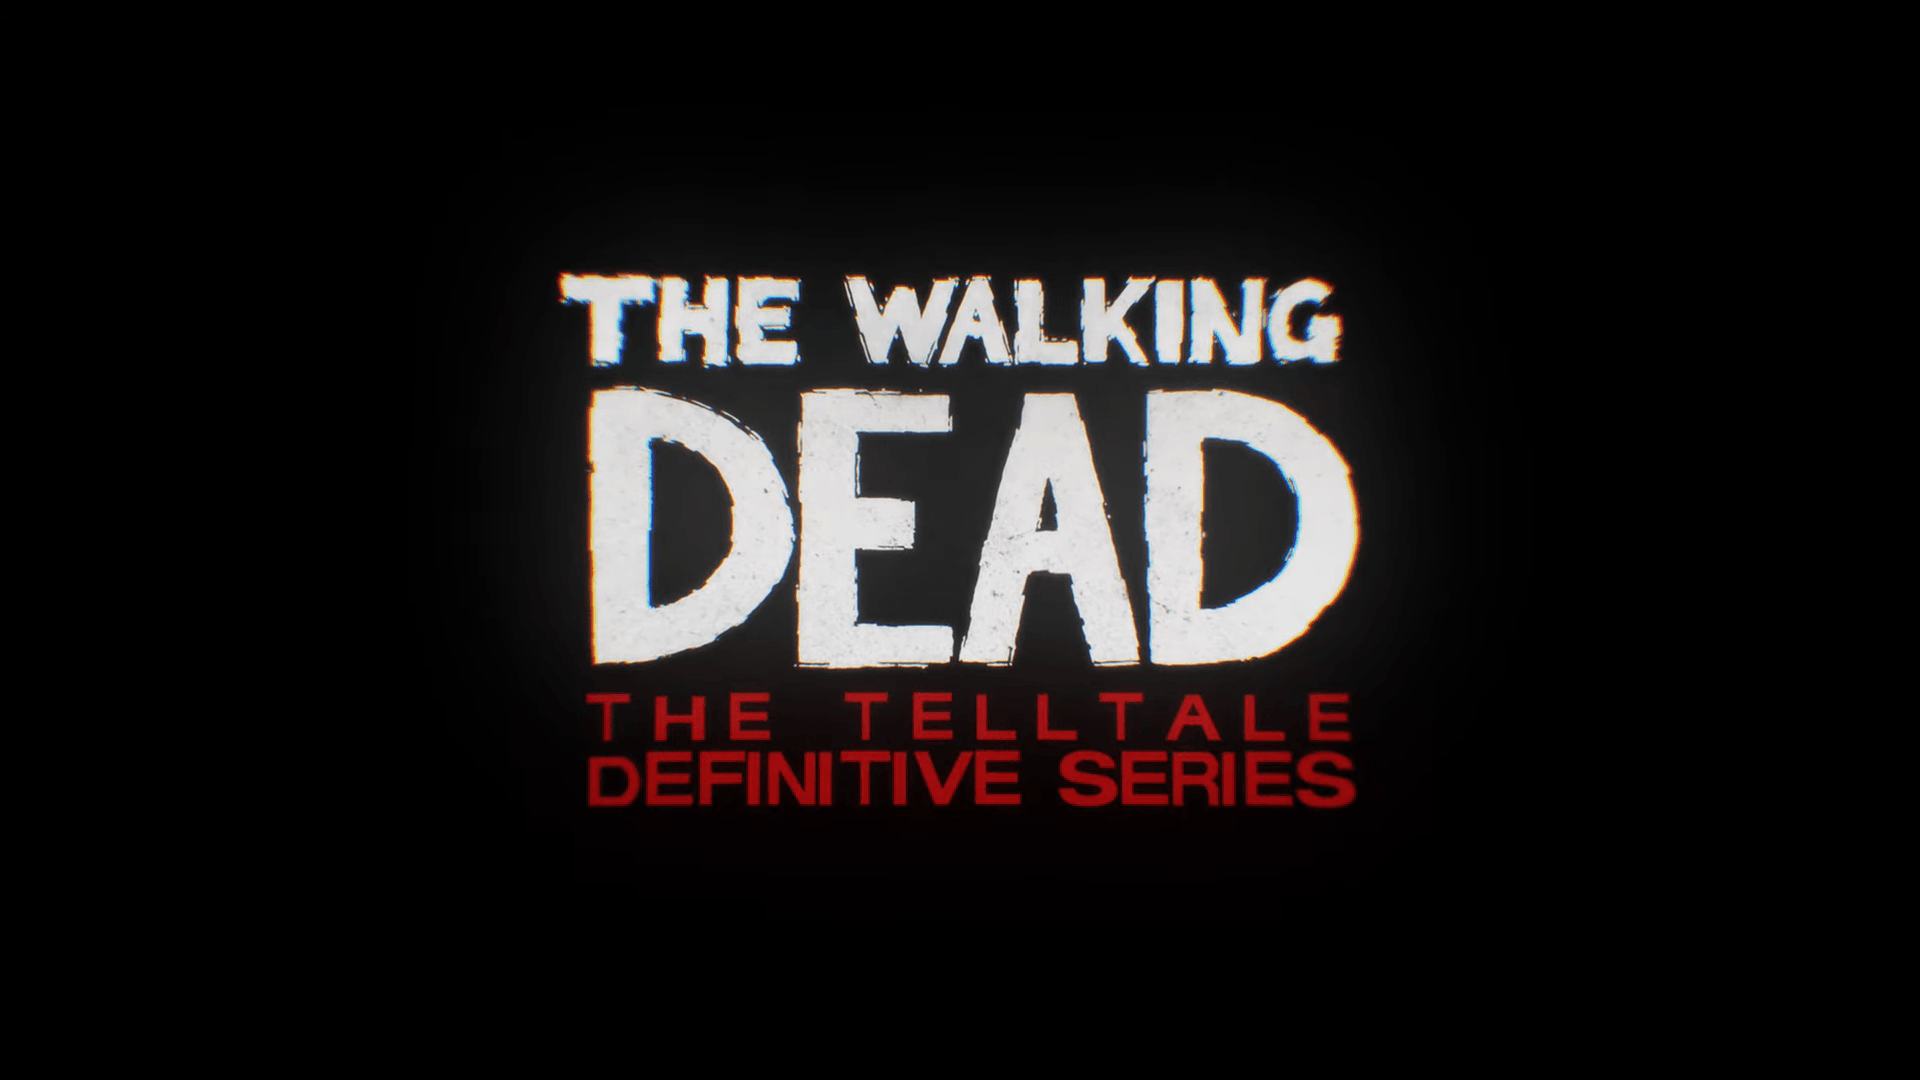 The Walking Dead The Telltale Definitive Series Wallpapers Wallpaper 0799